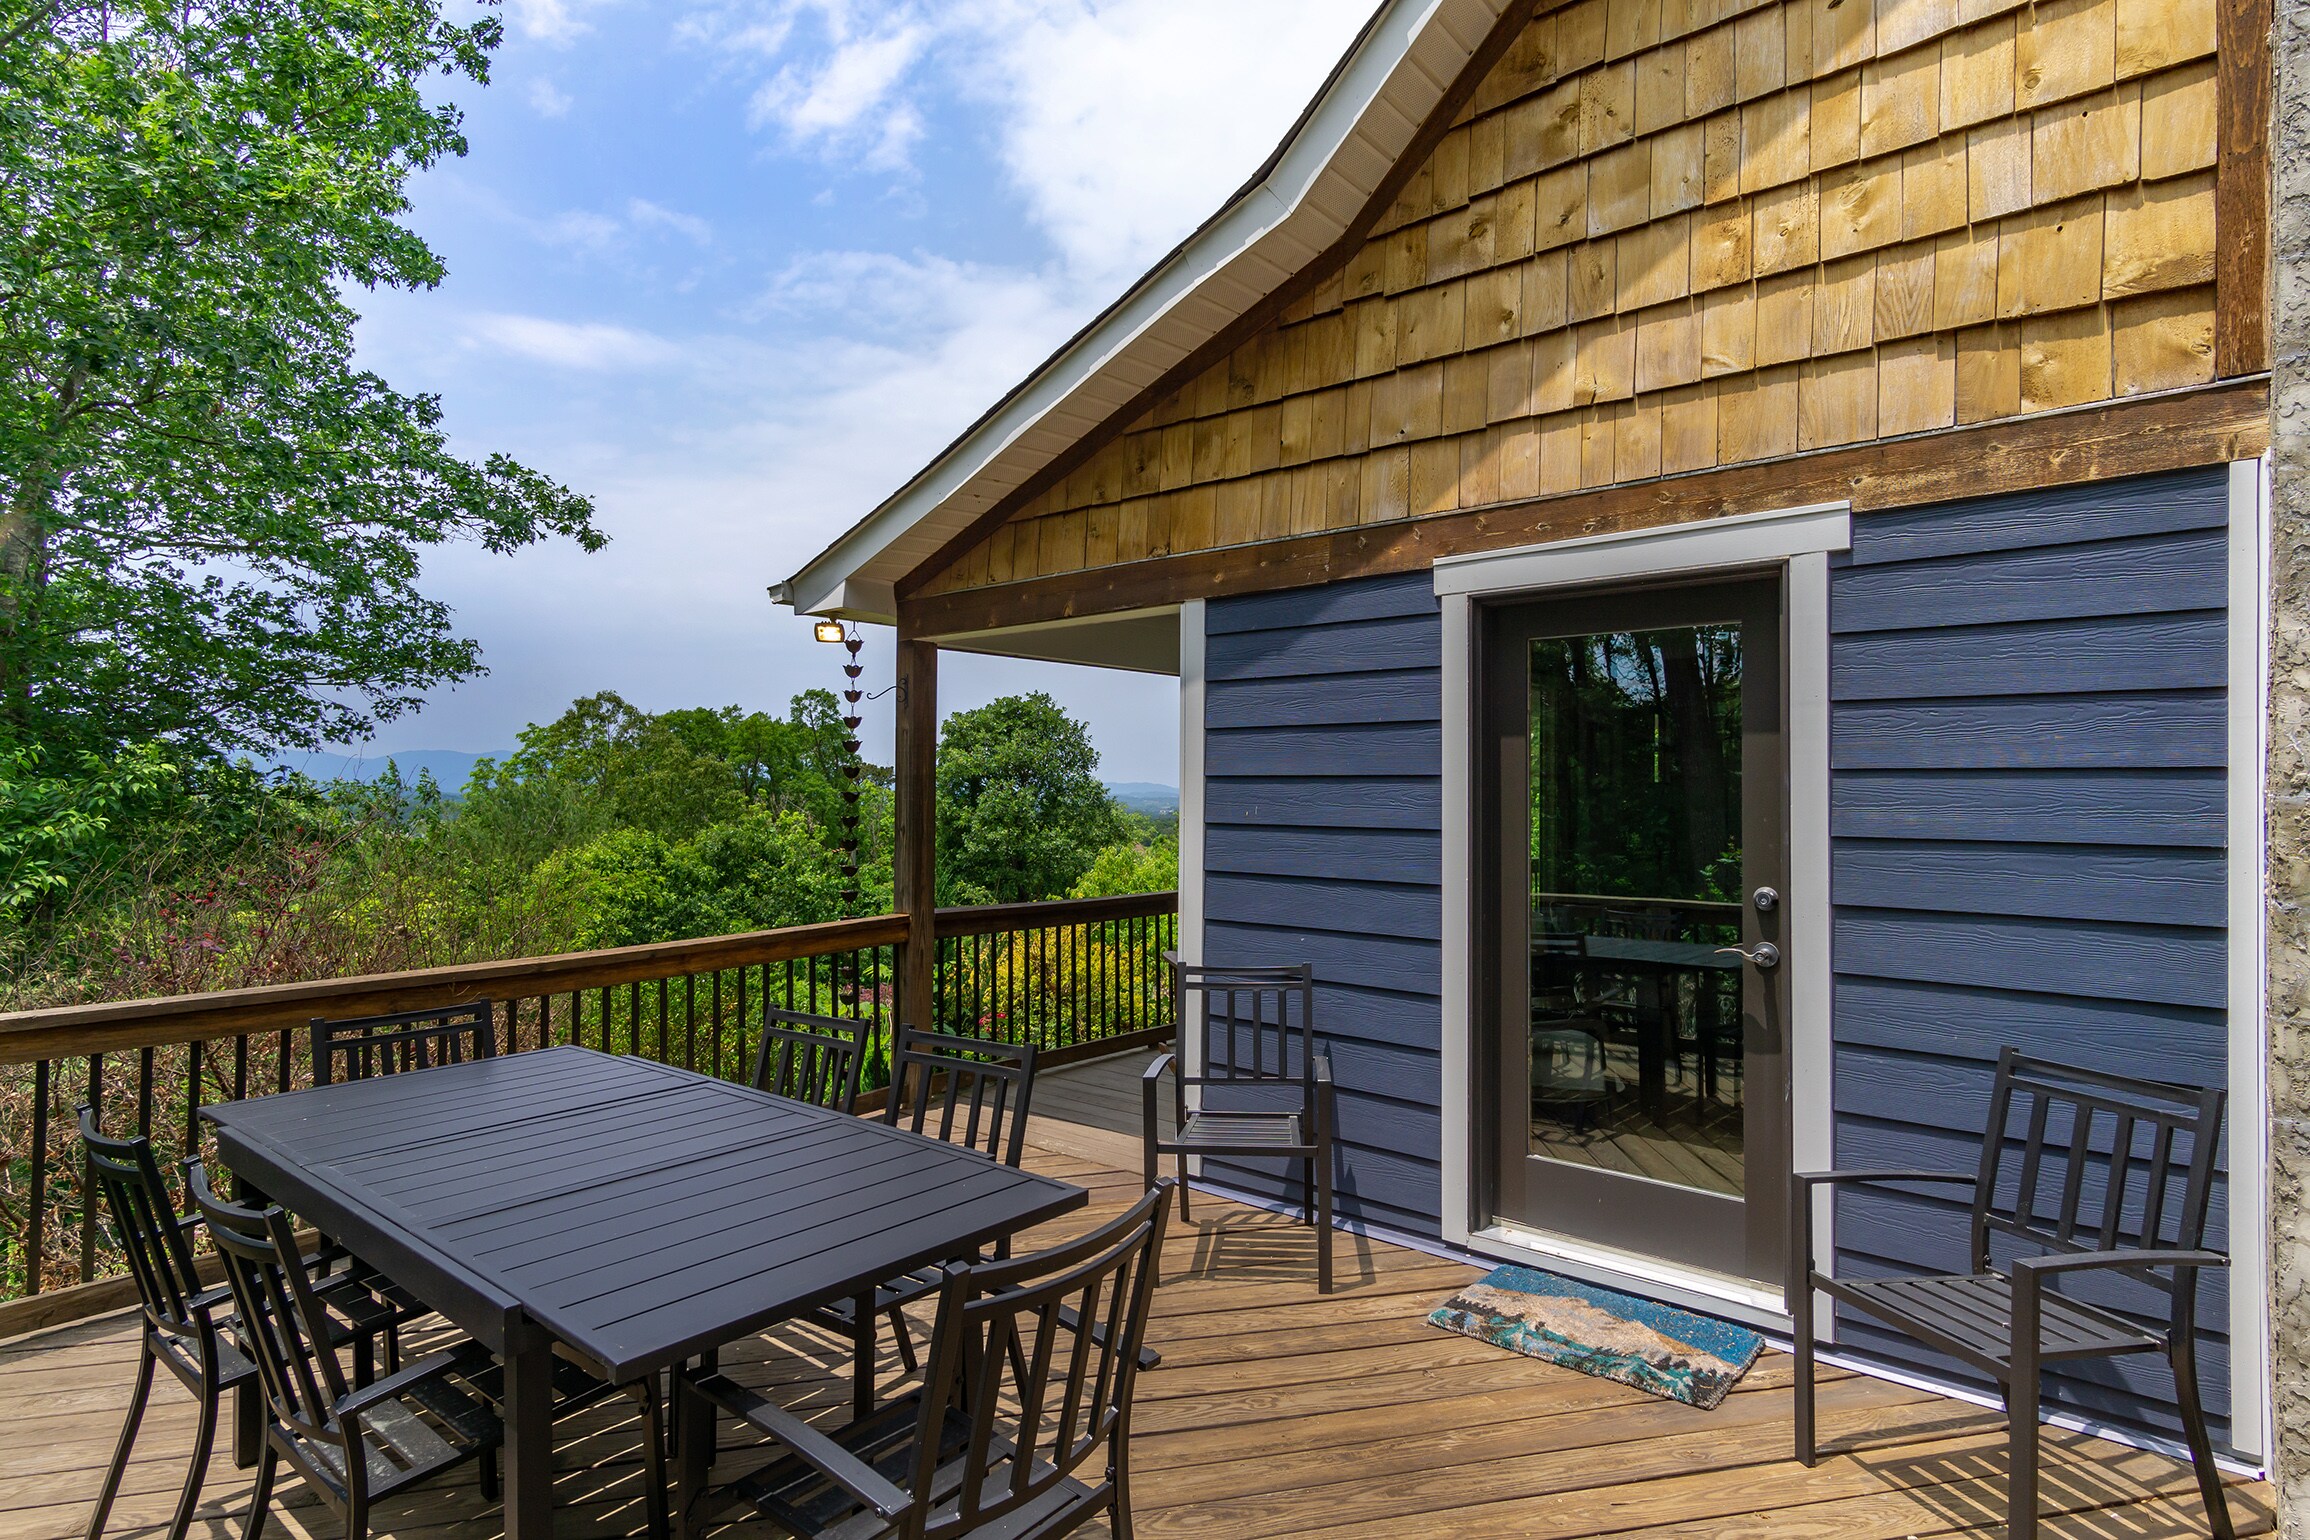 Enjoy distant views of the Blue Ridge Mountains while dining al fresco on the deck.